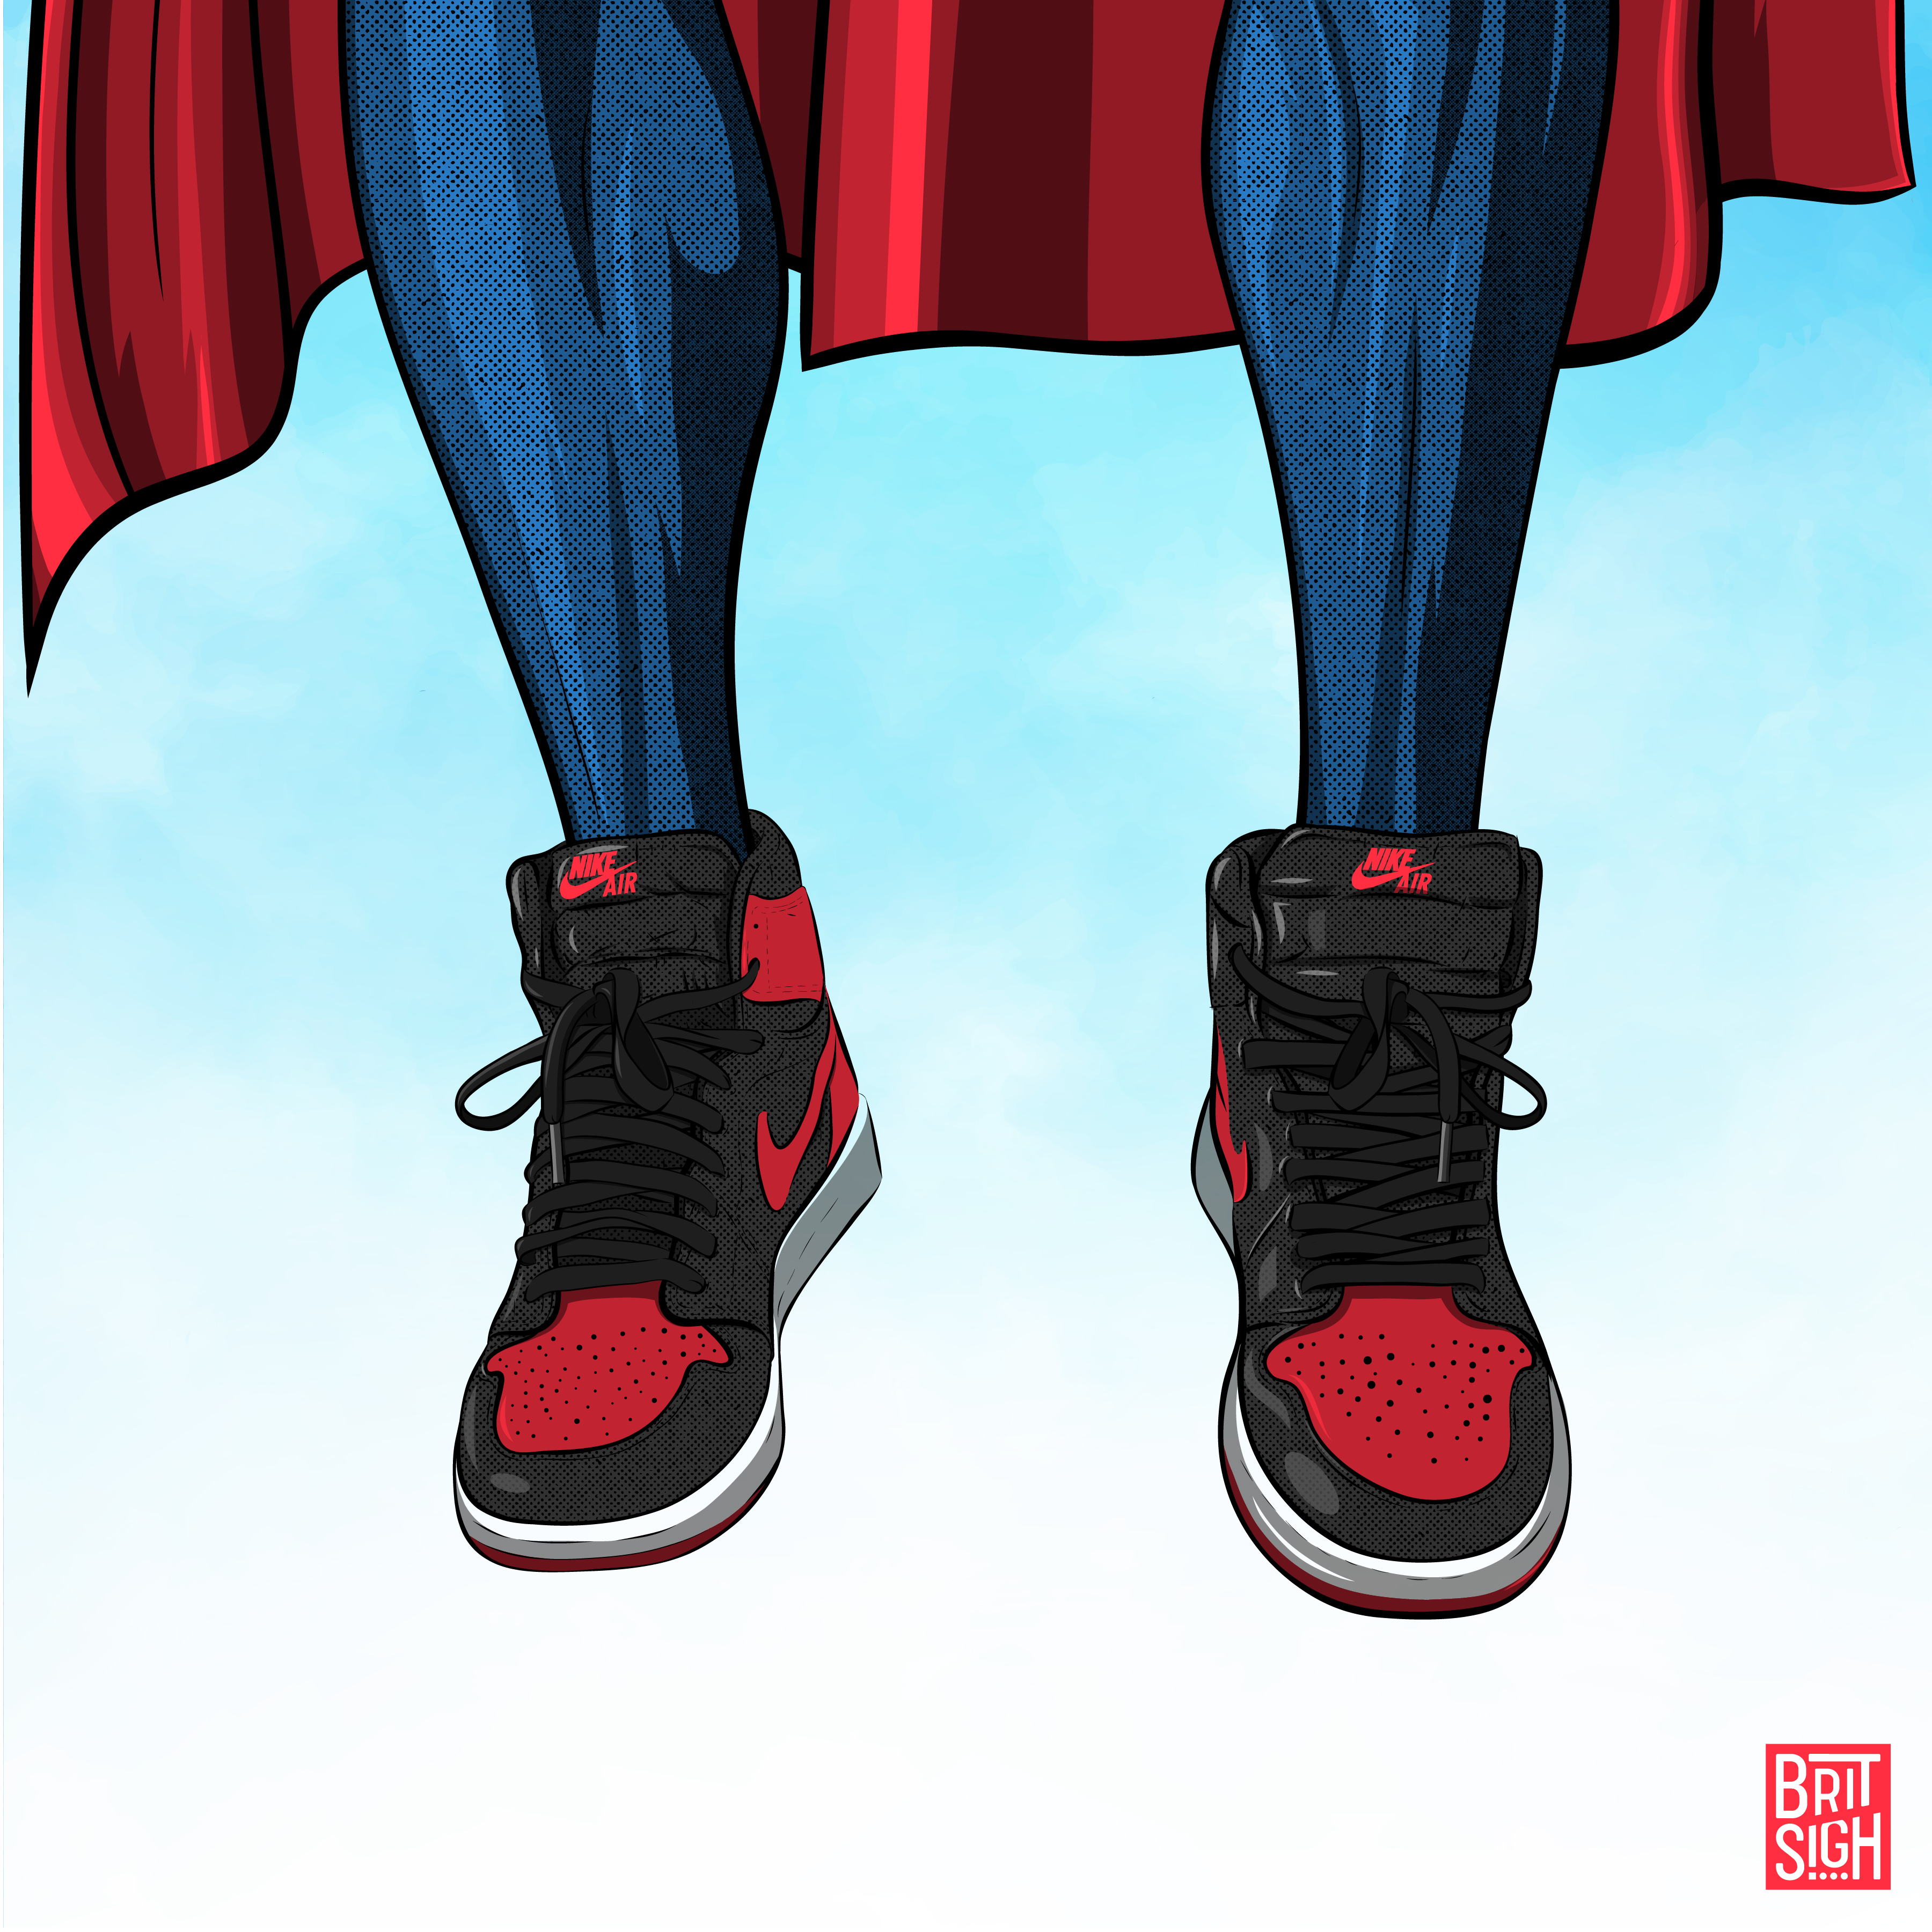 Superman / Jordan 1 by Brit Sigh on 